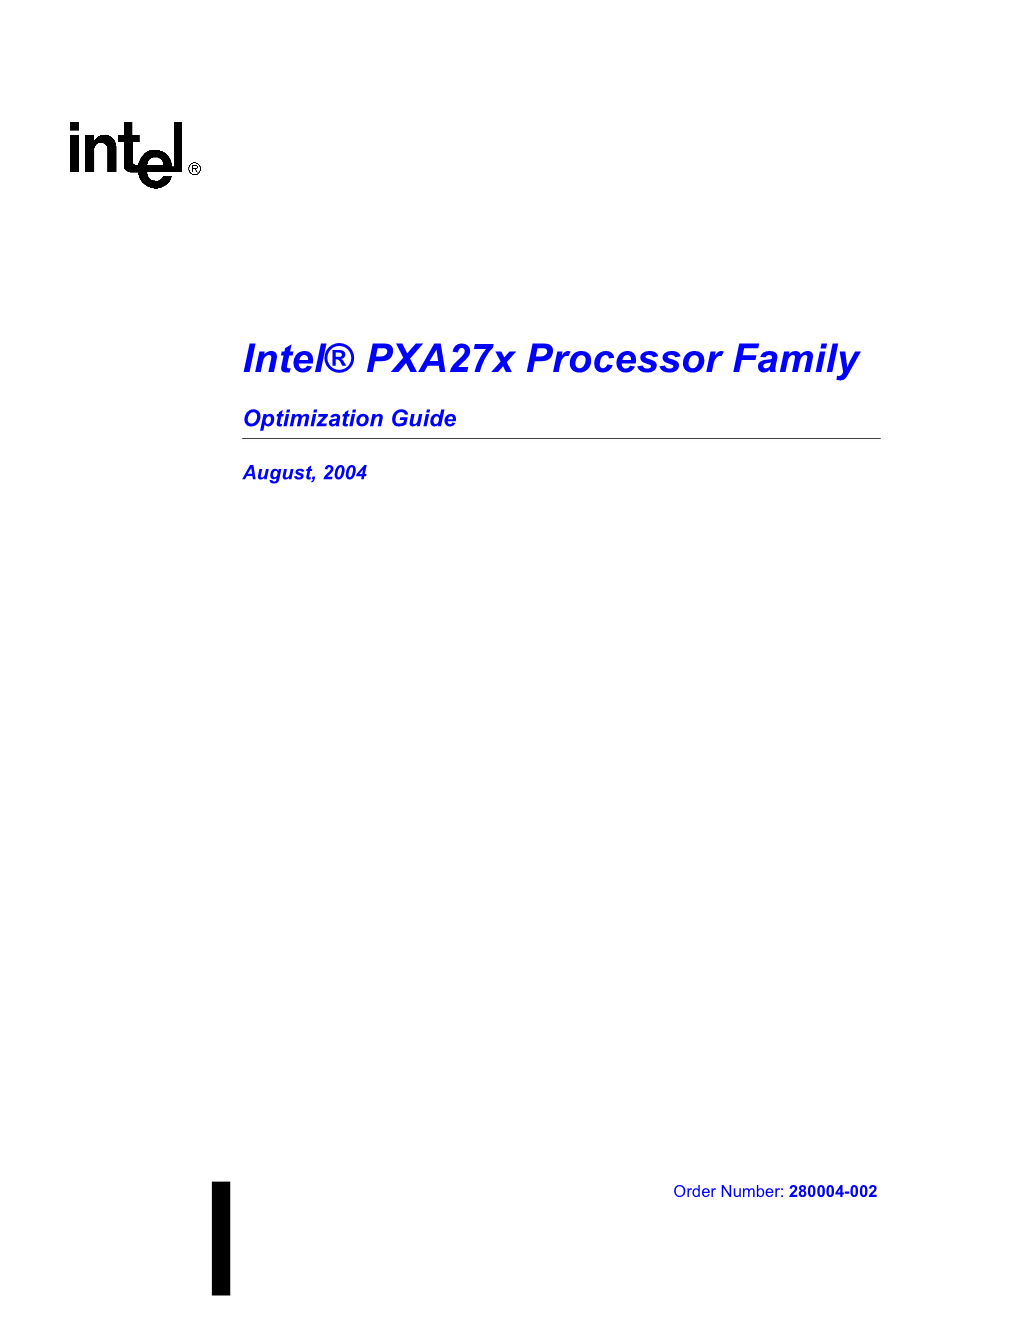 Intel® Pxa27x Processor Family